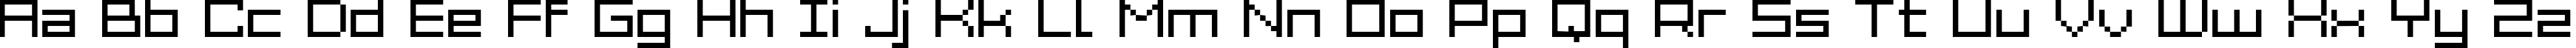 Пример написания английского алфавита шрифтом Grixel Acme 7 Wide